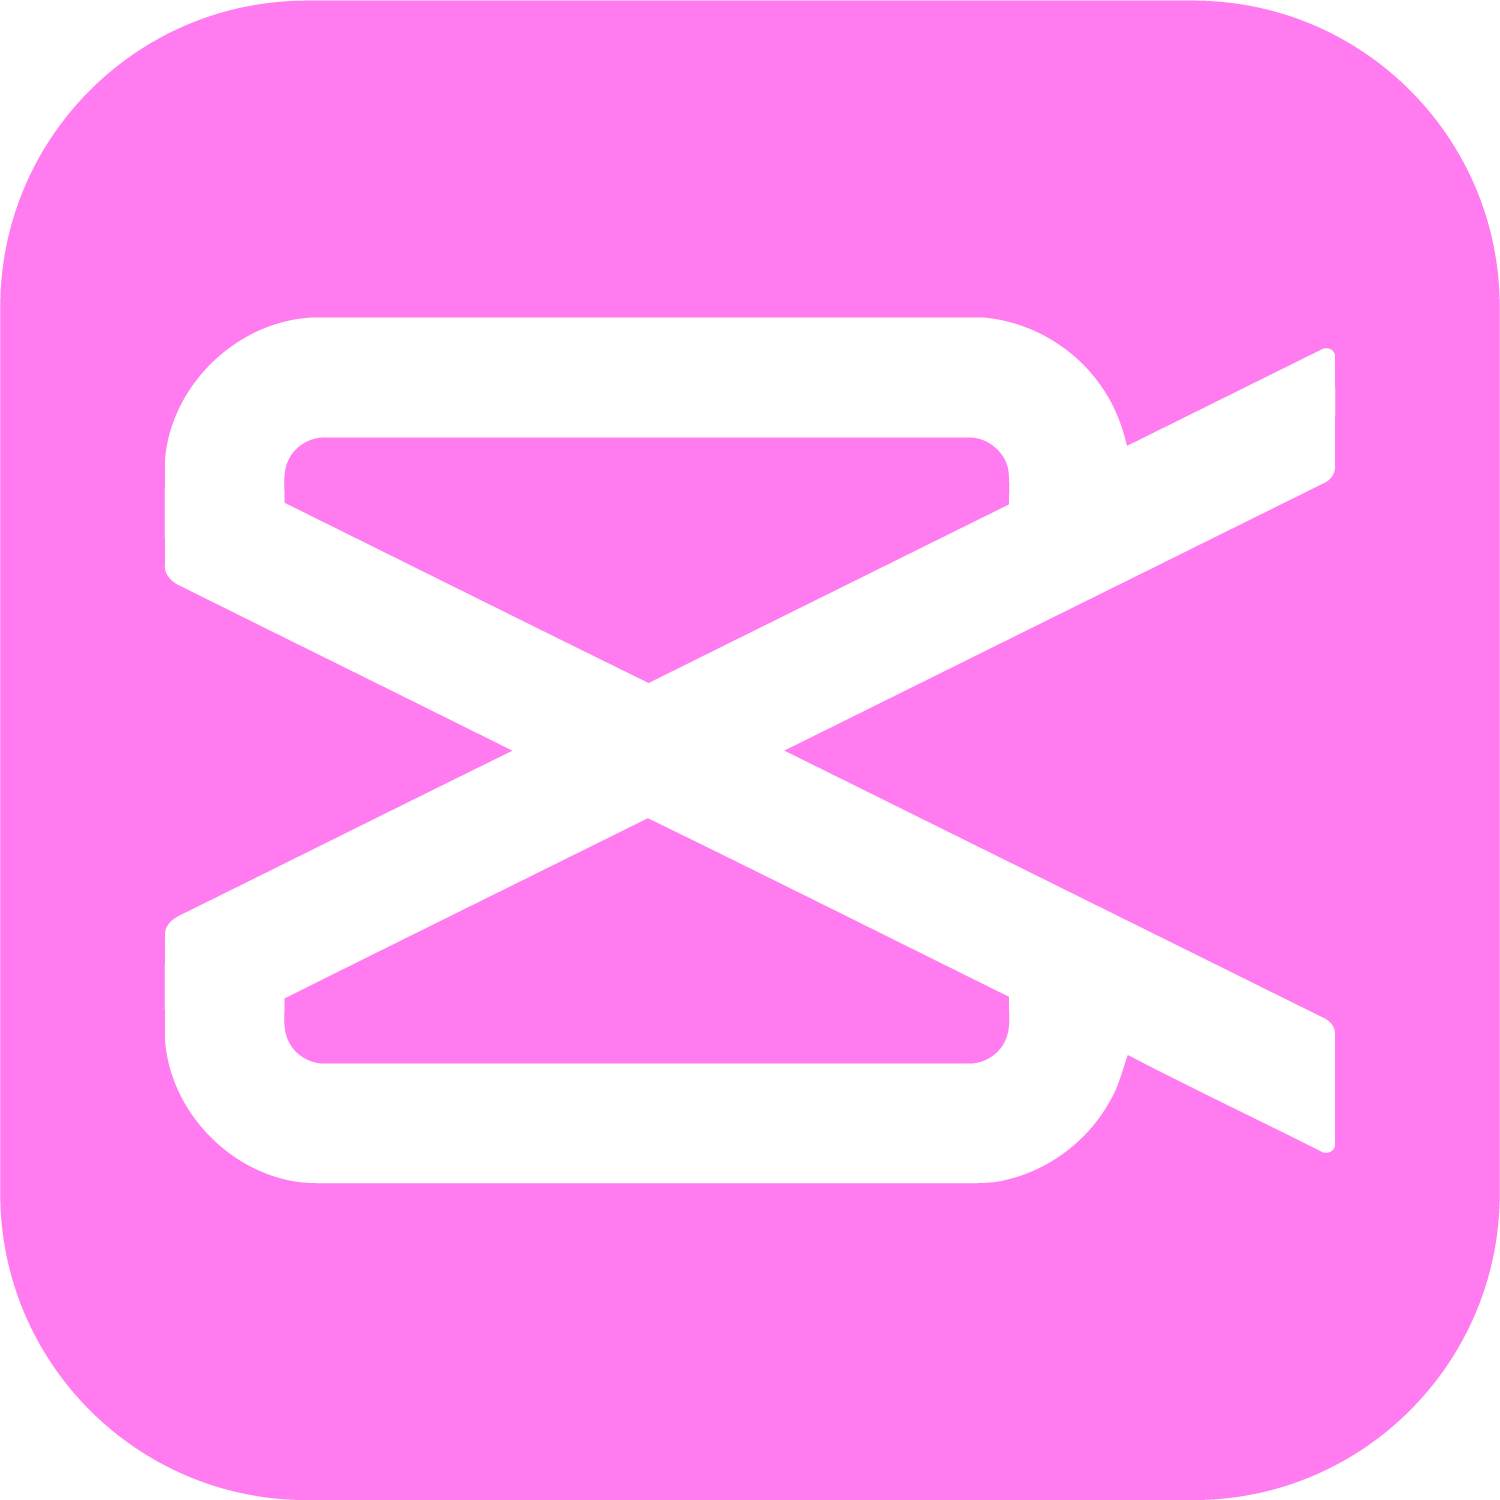 capcut logo pink